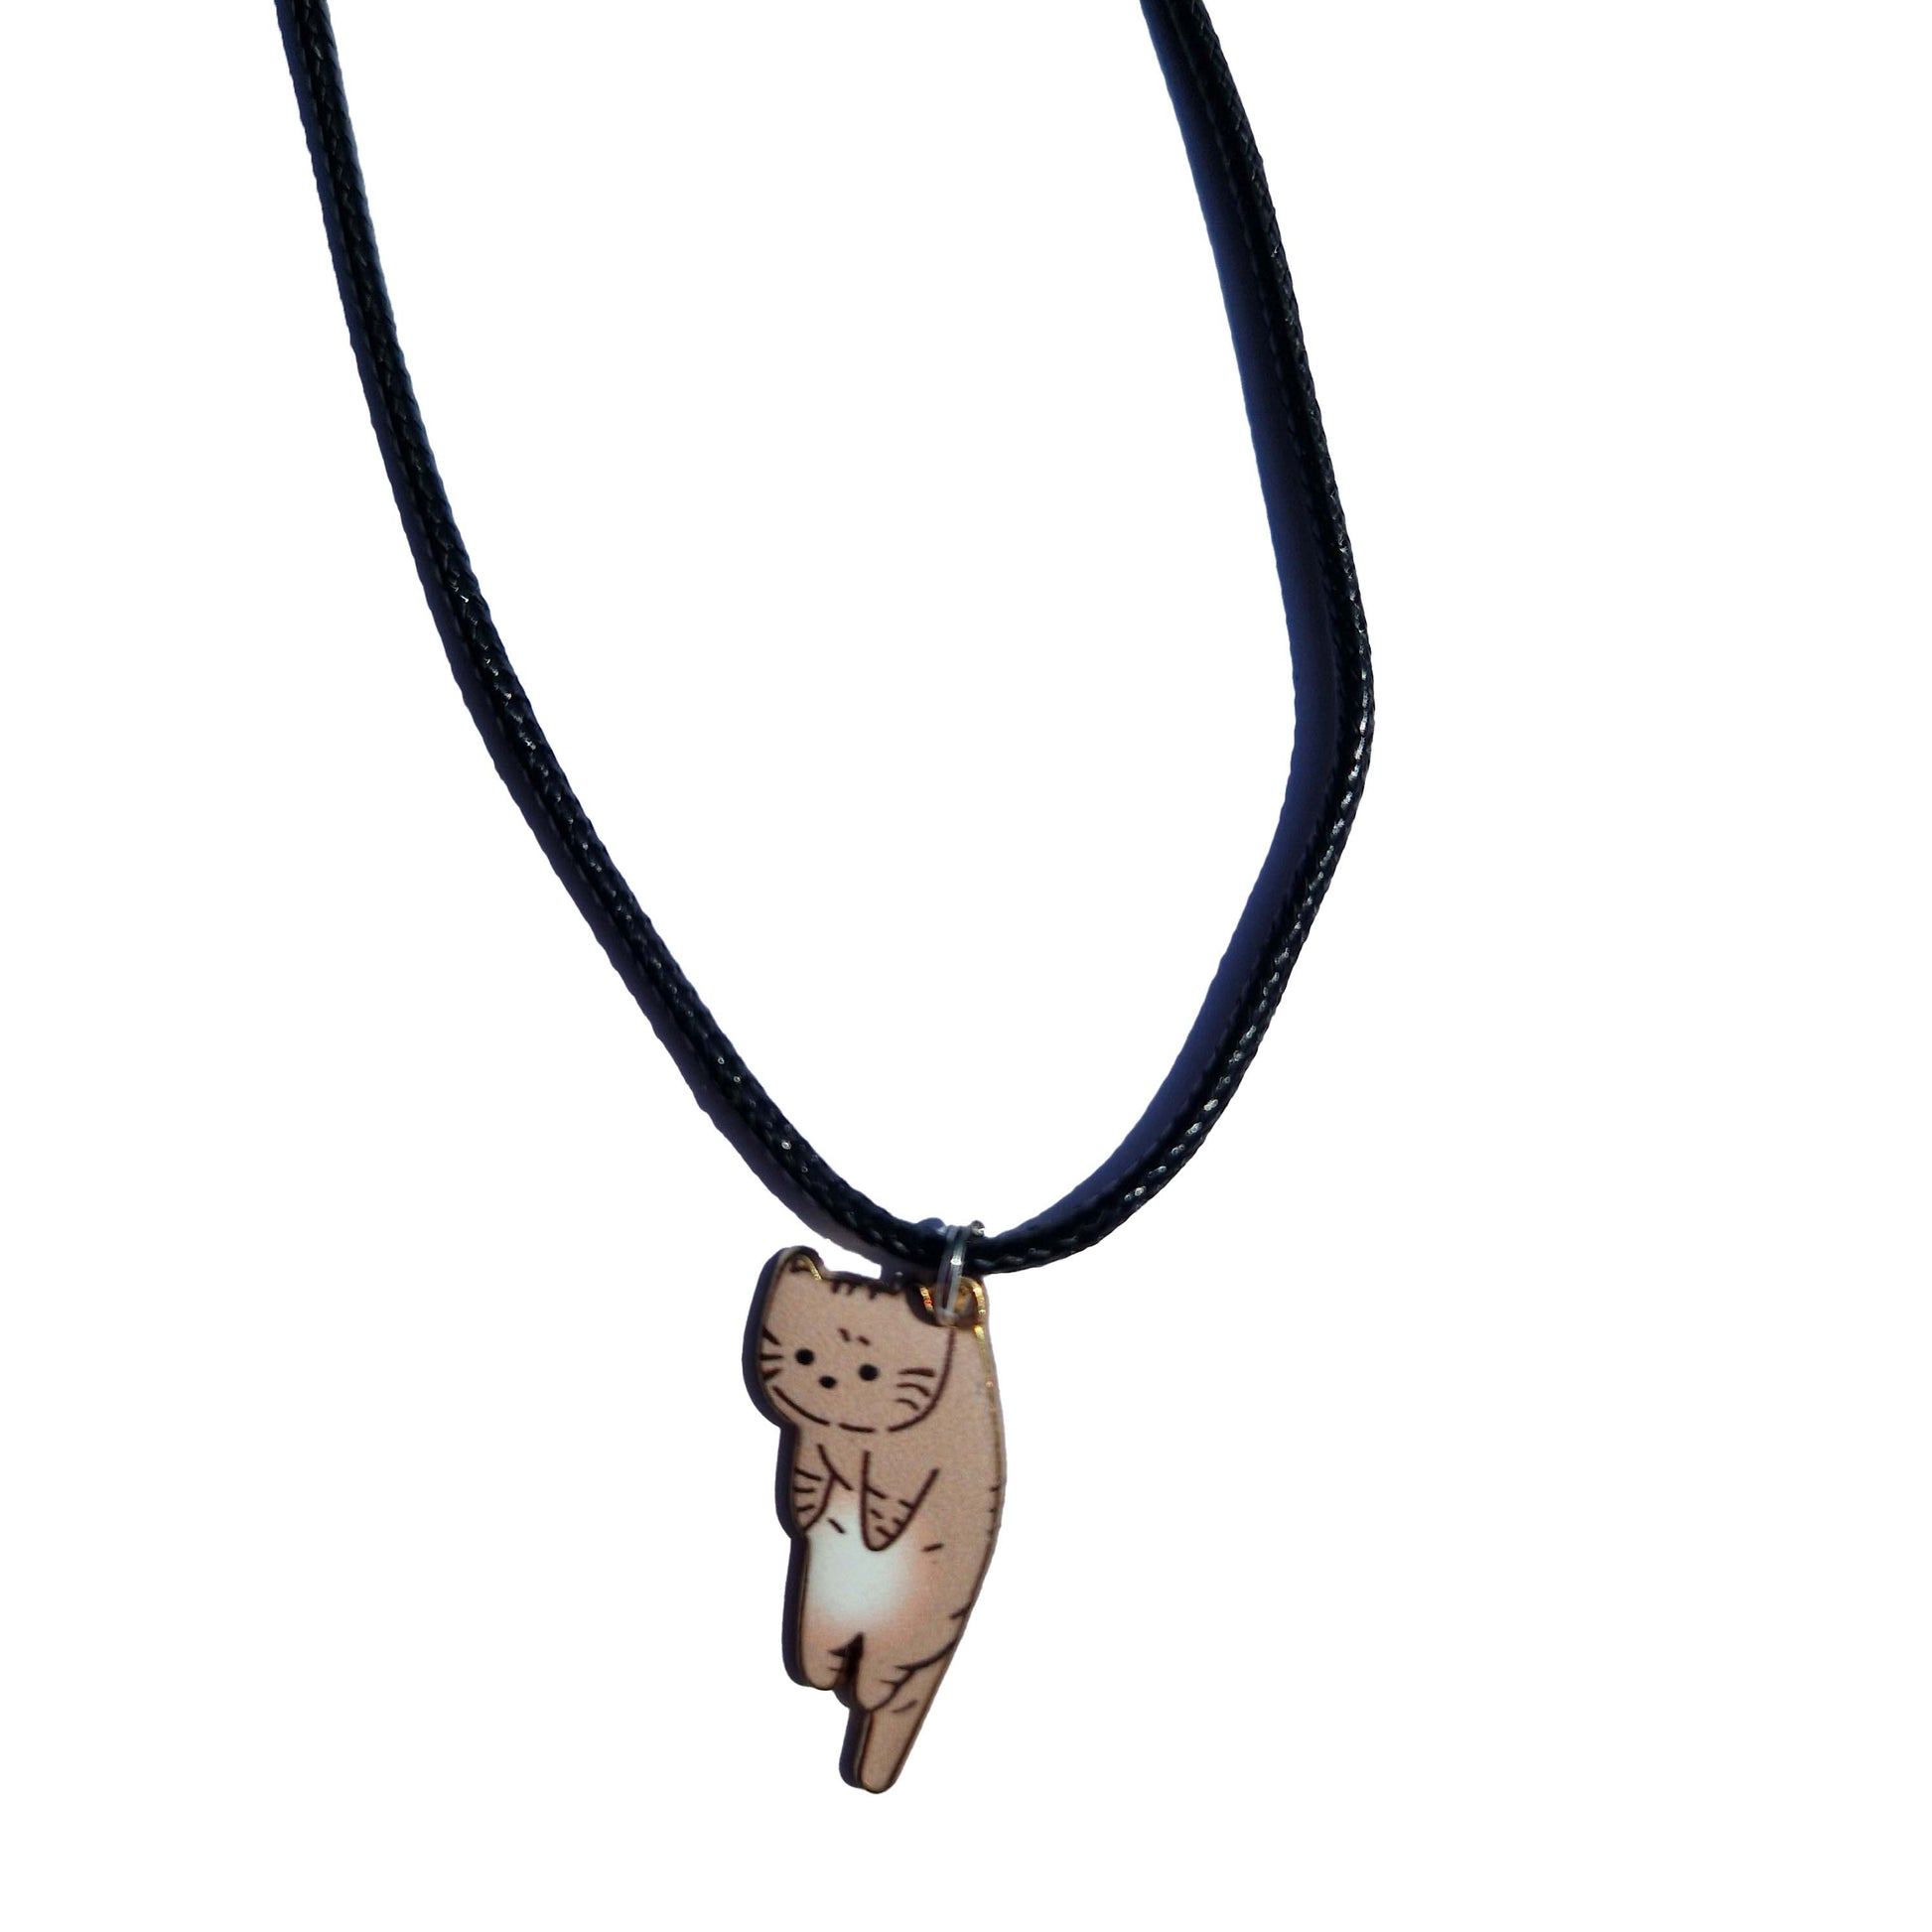 tan cat necklace | cord necklaces uk